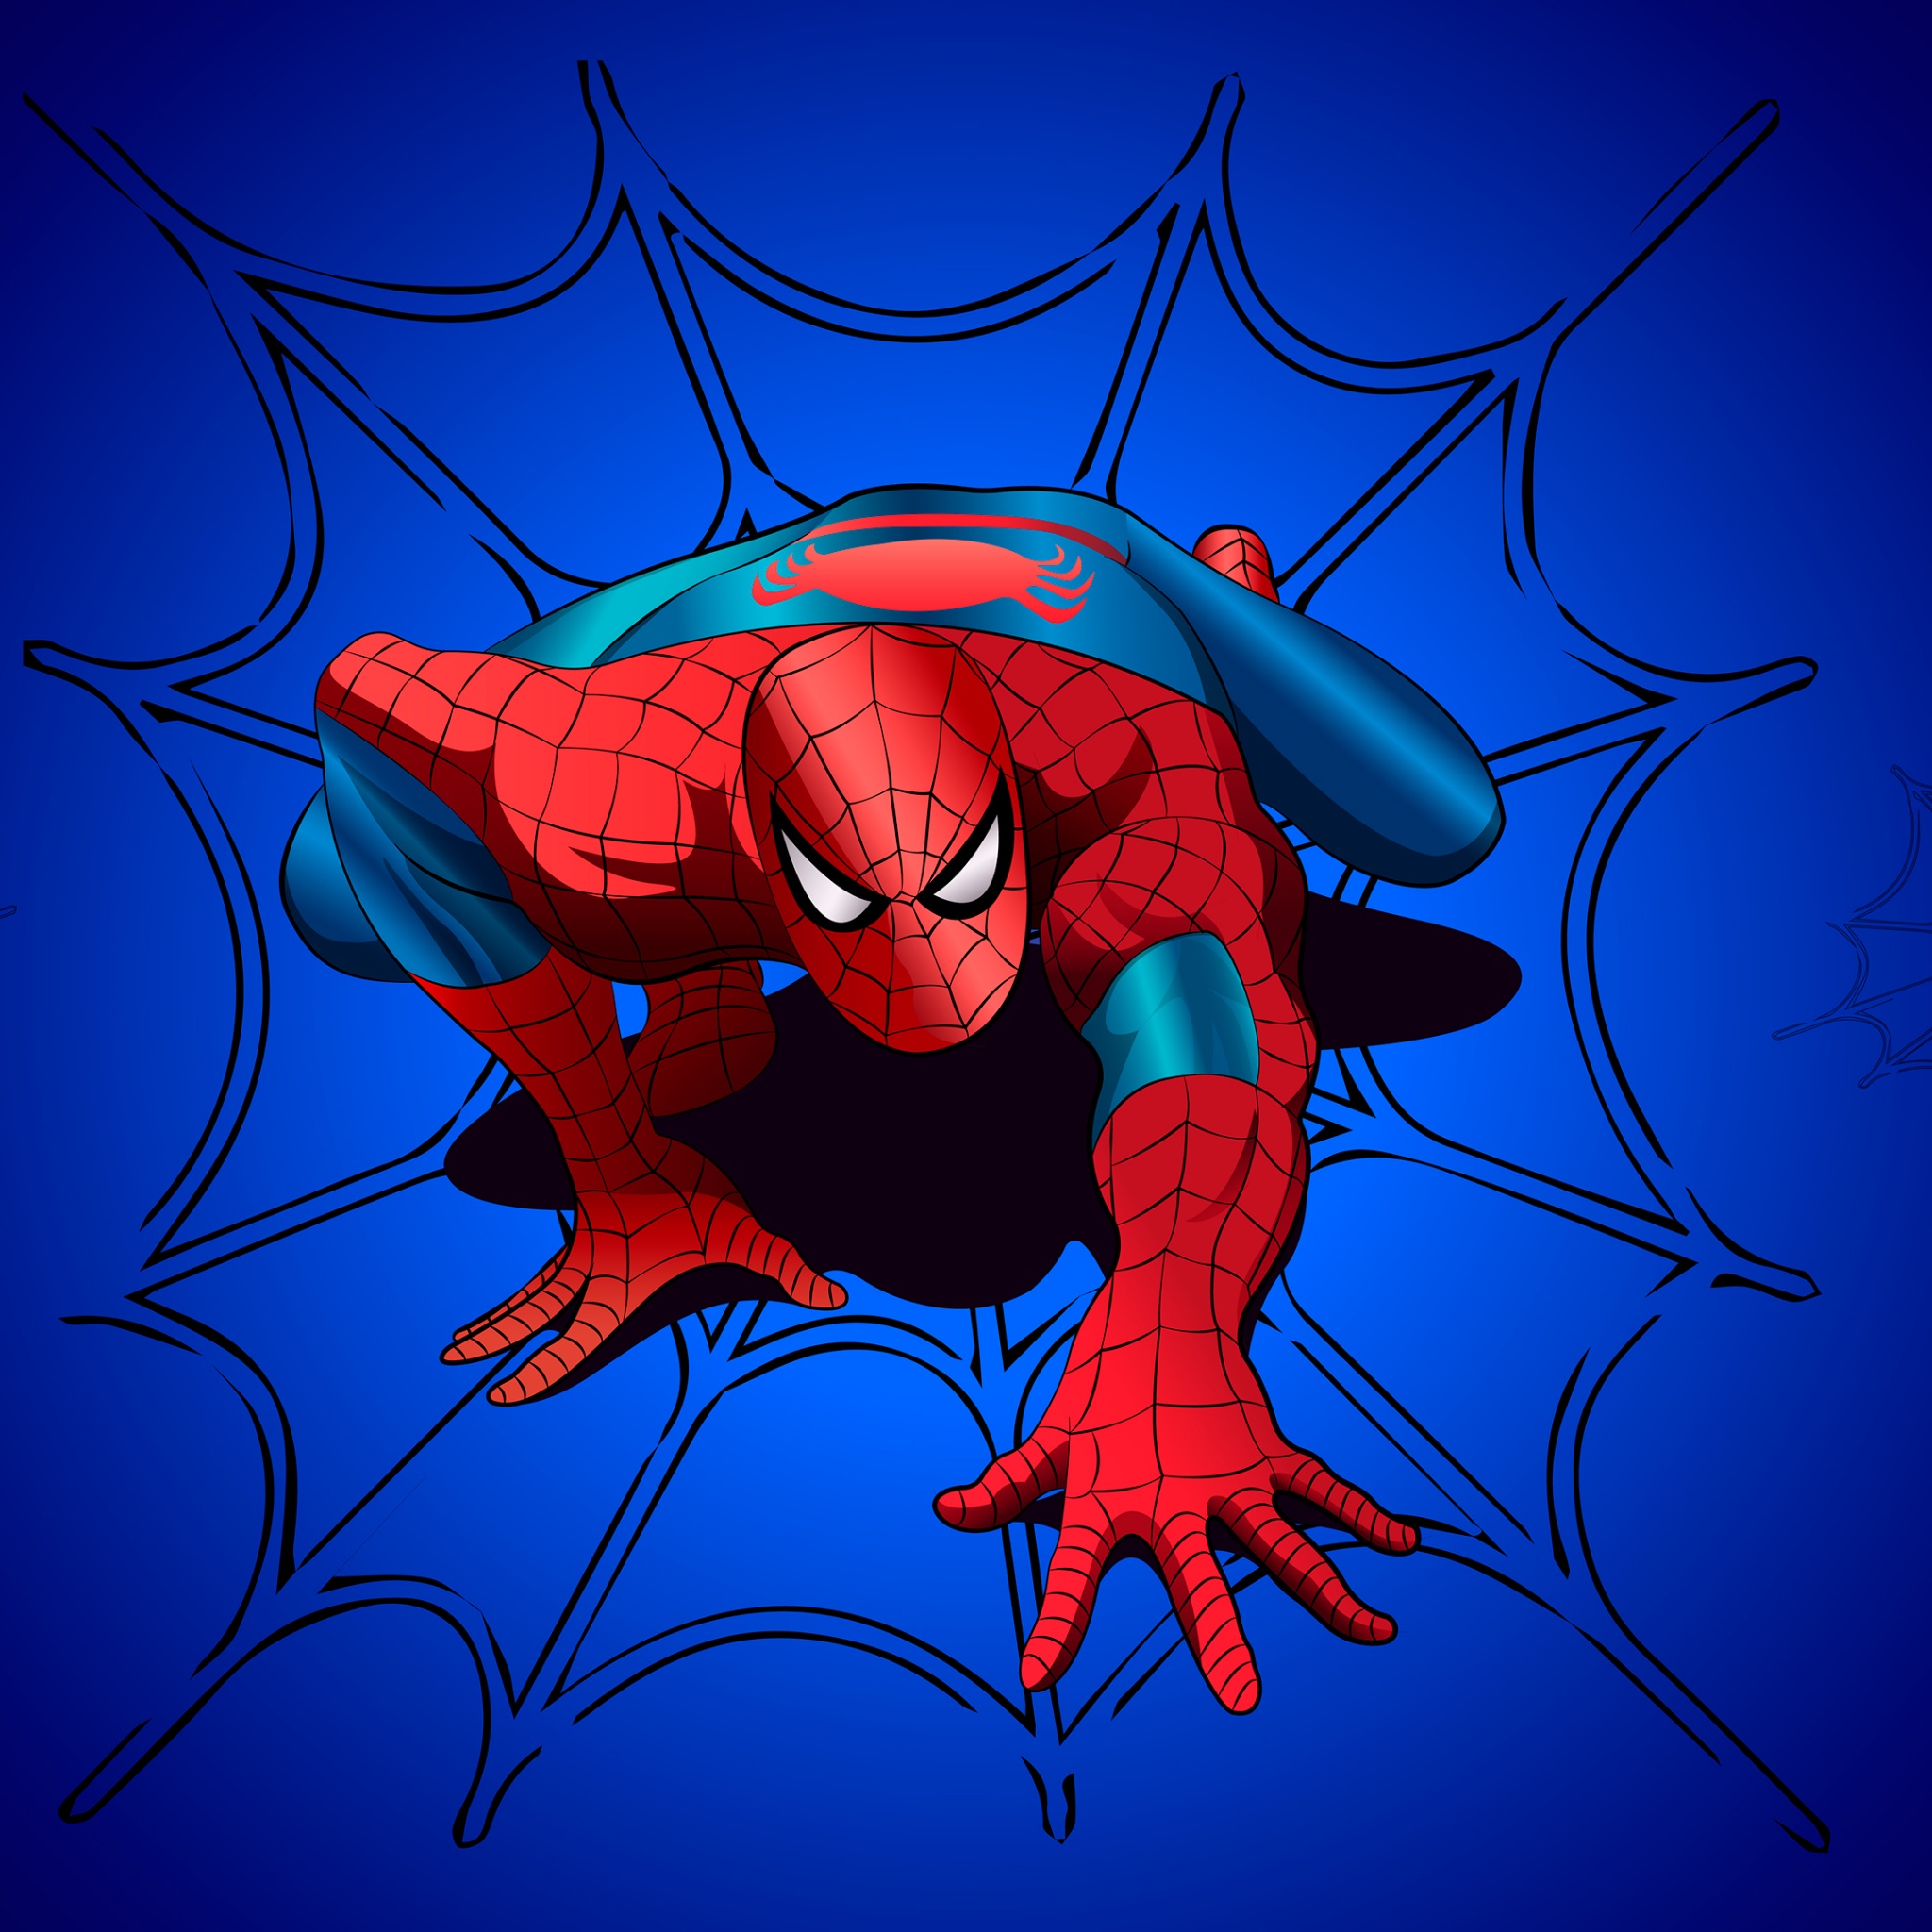 Spider Man Wallpaper 4K, Blue Background, Marvel Superheroes, Graphics CGI